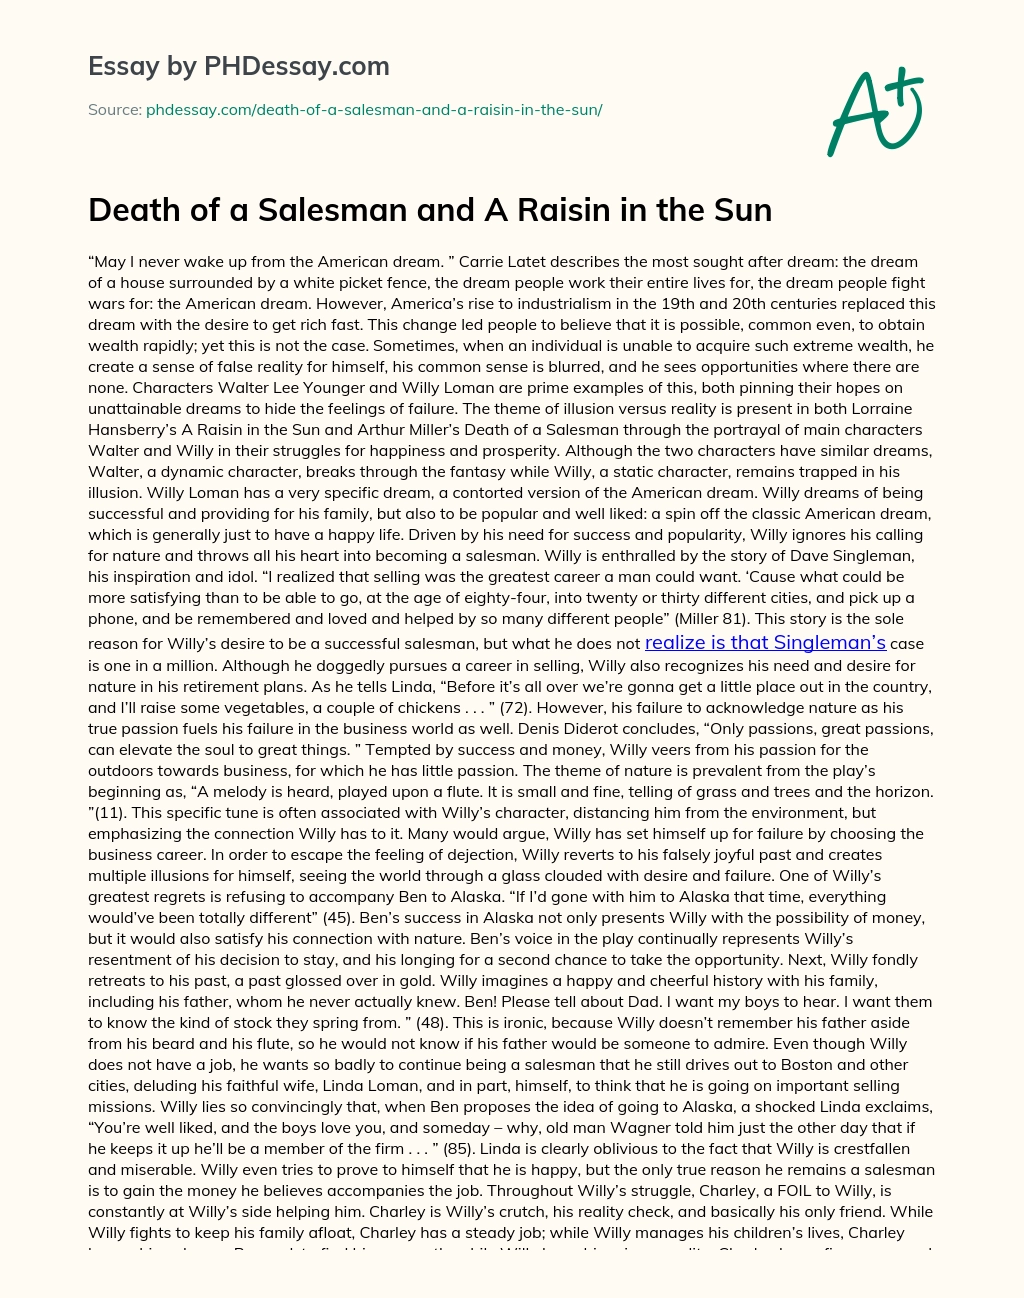 Death of a Salesman and A Raisin in the Sun essay